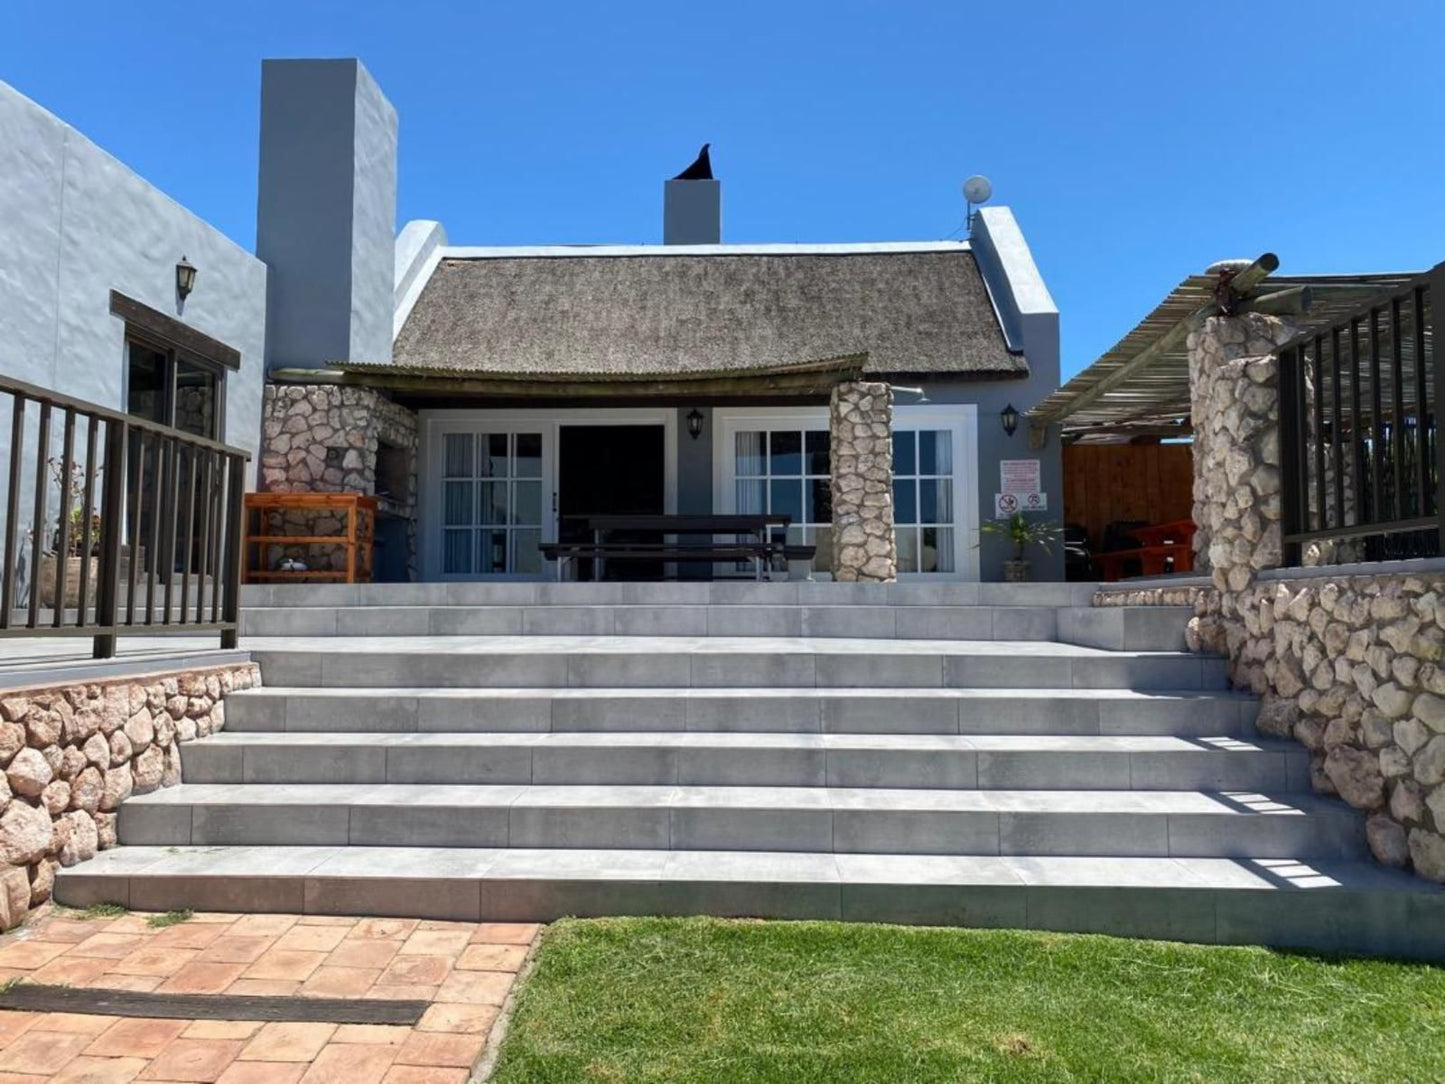 Poseidon Langebaan Olifantskop Langebaan Western Cape South Africa House, Building, Architecture